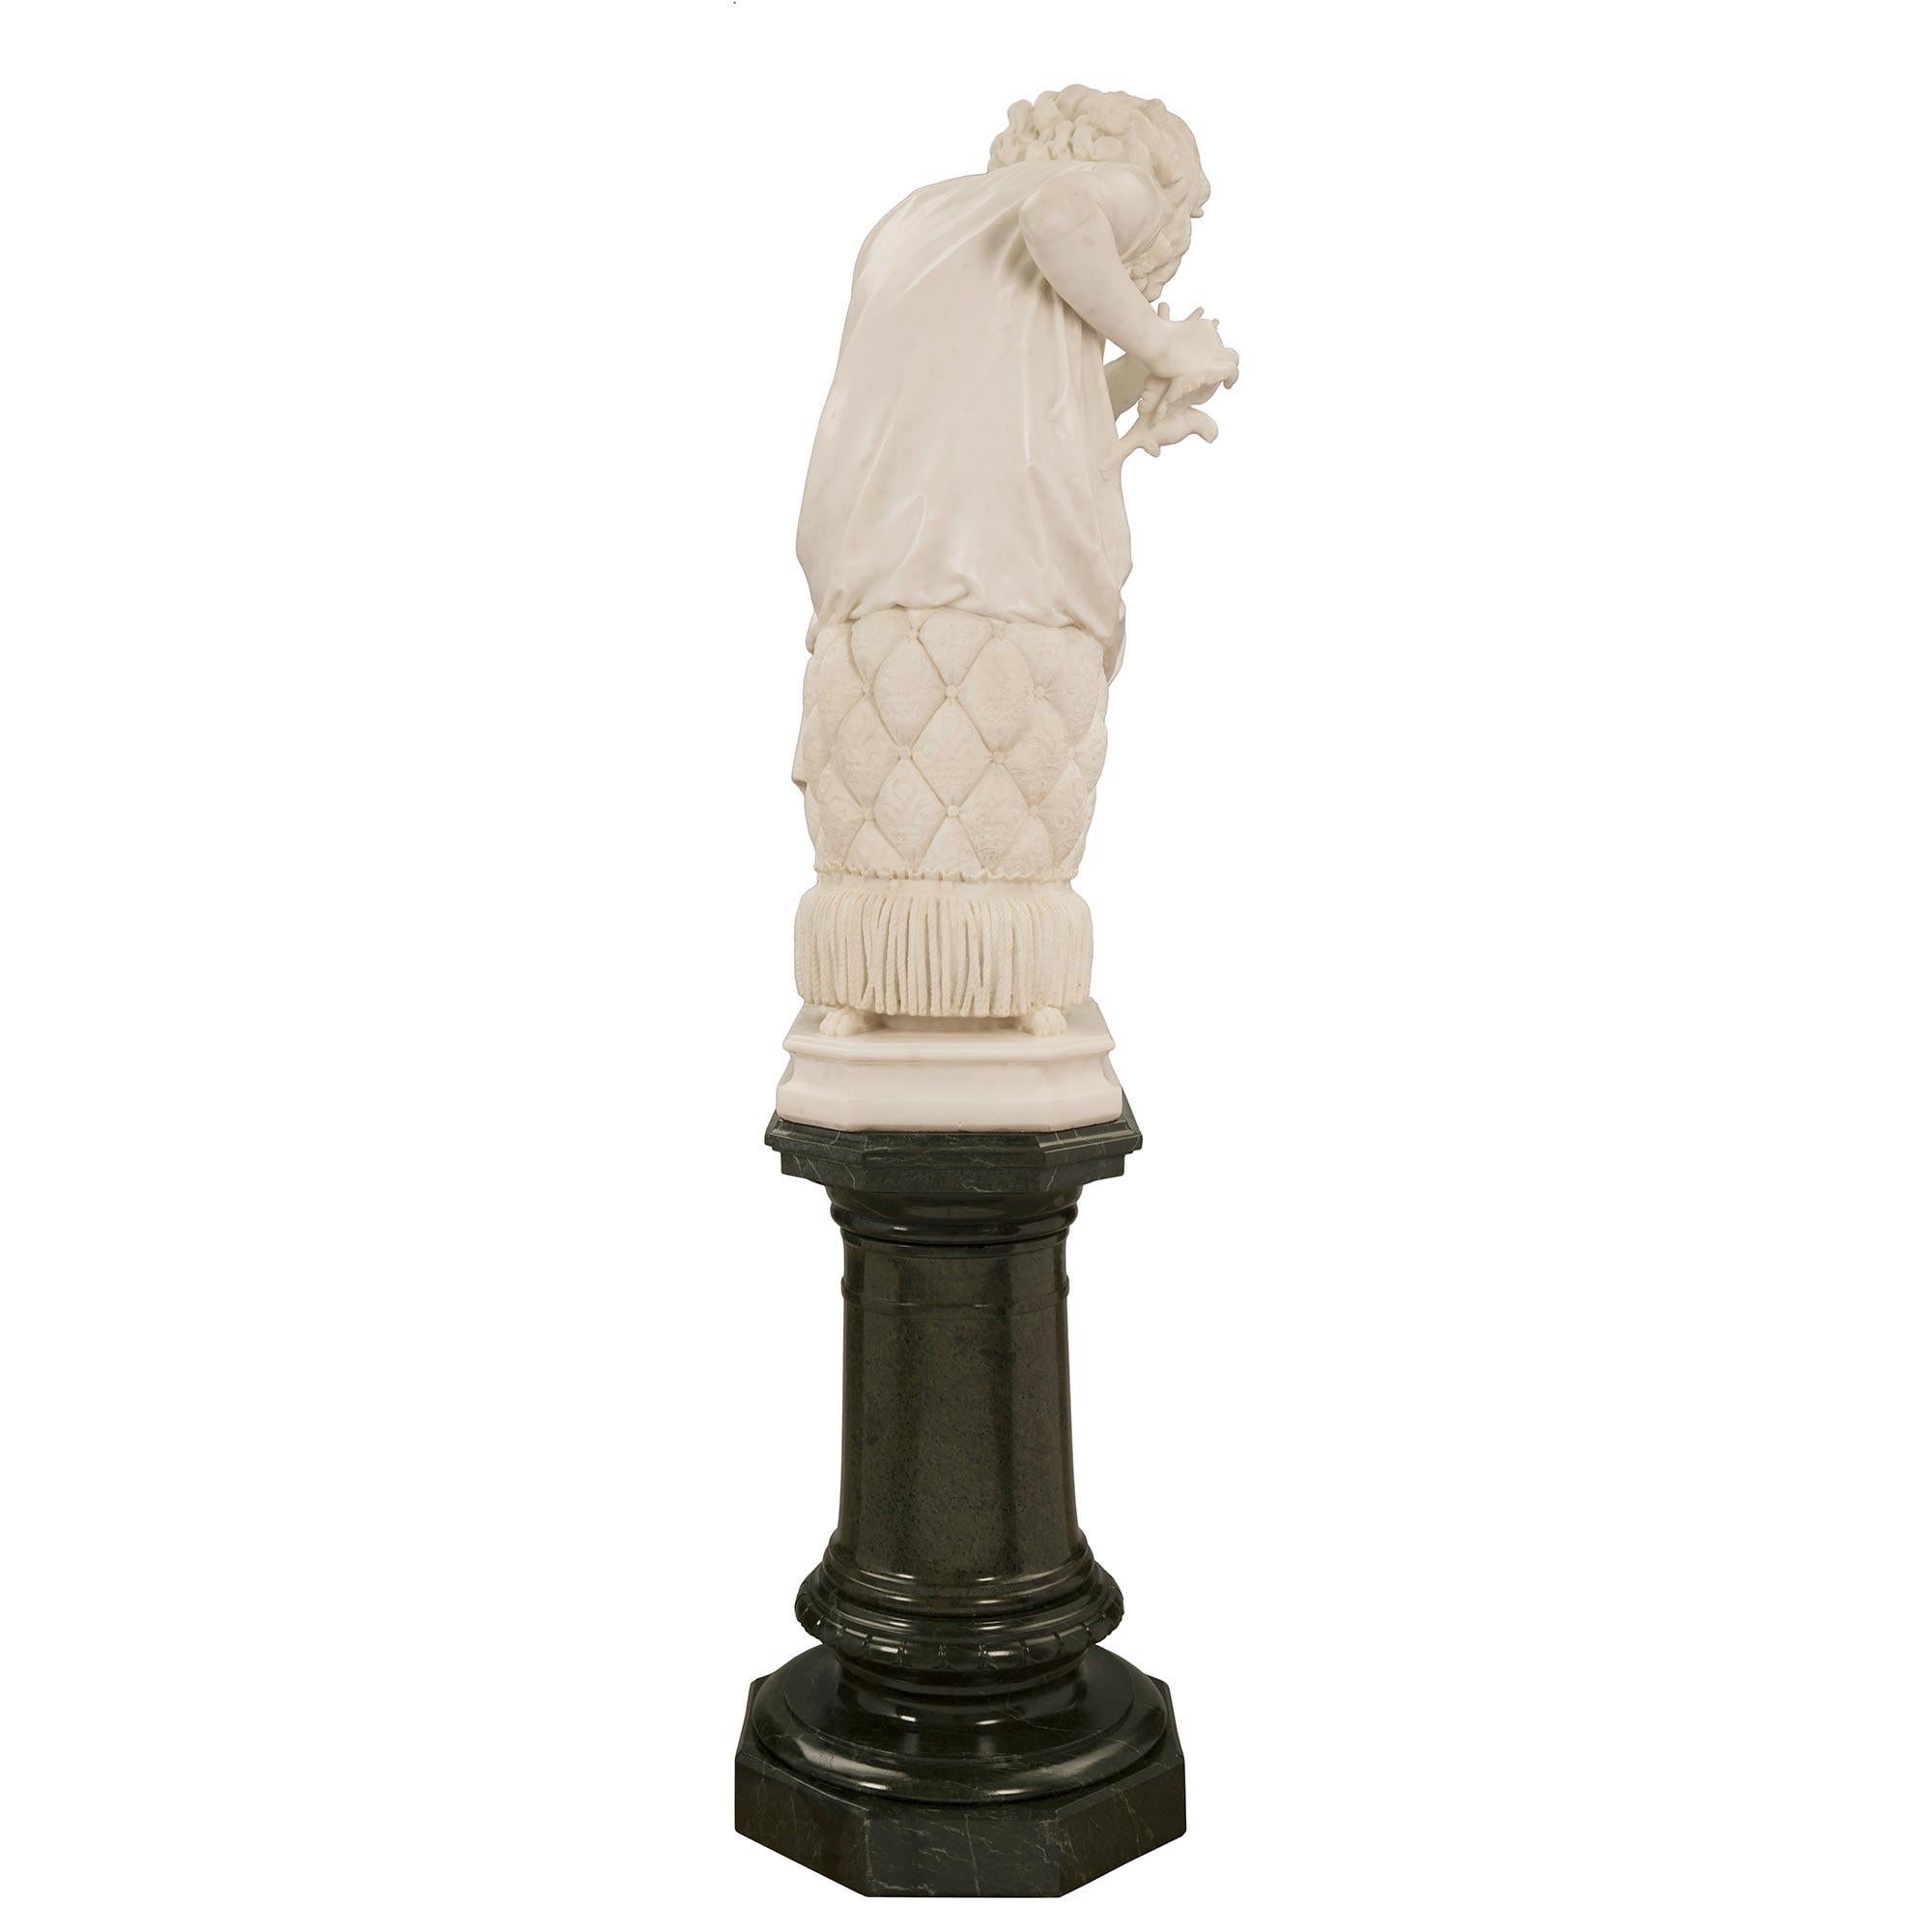 Italian 19th Century White Carrara Marble Statue on Its Original Swivel Pedestal For Sale 2